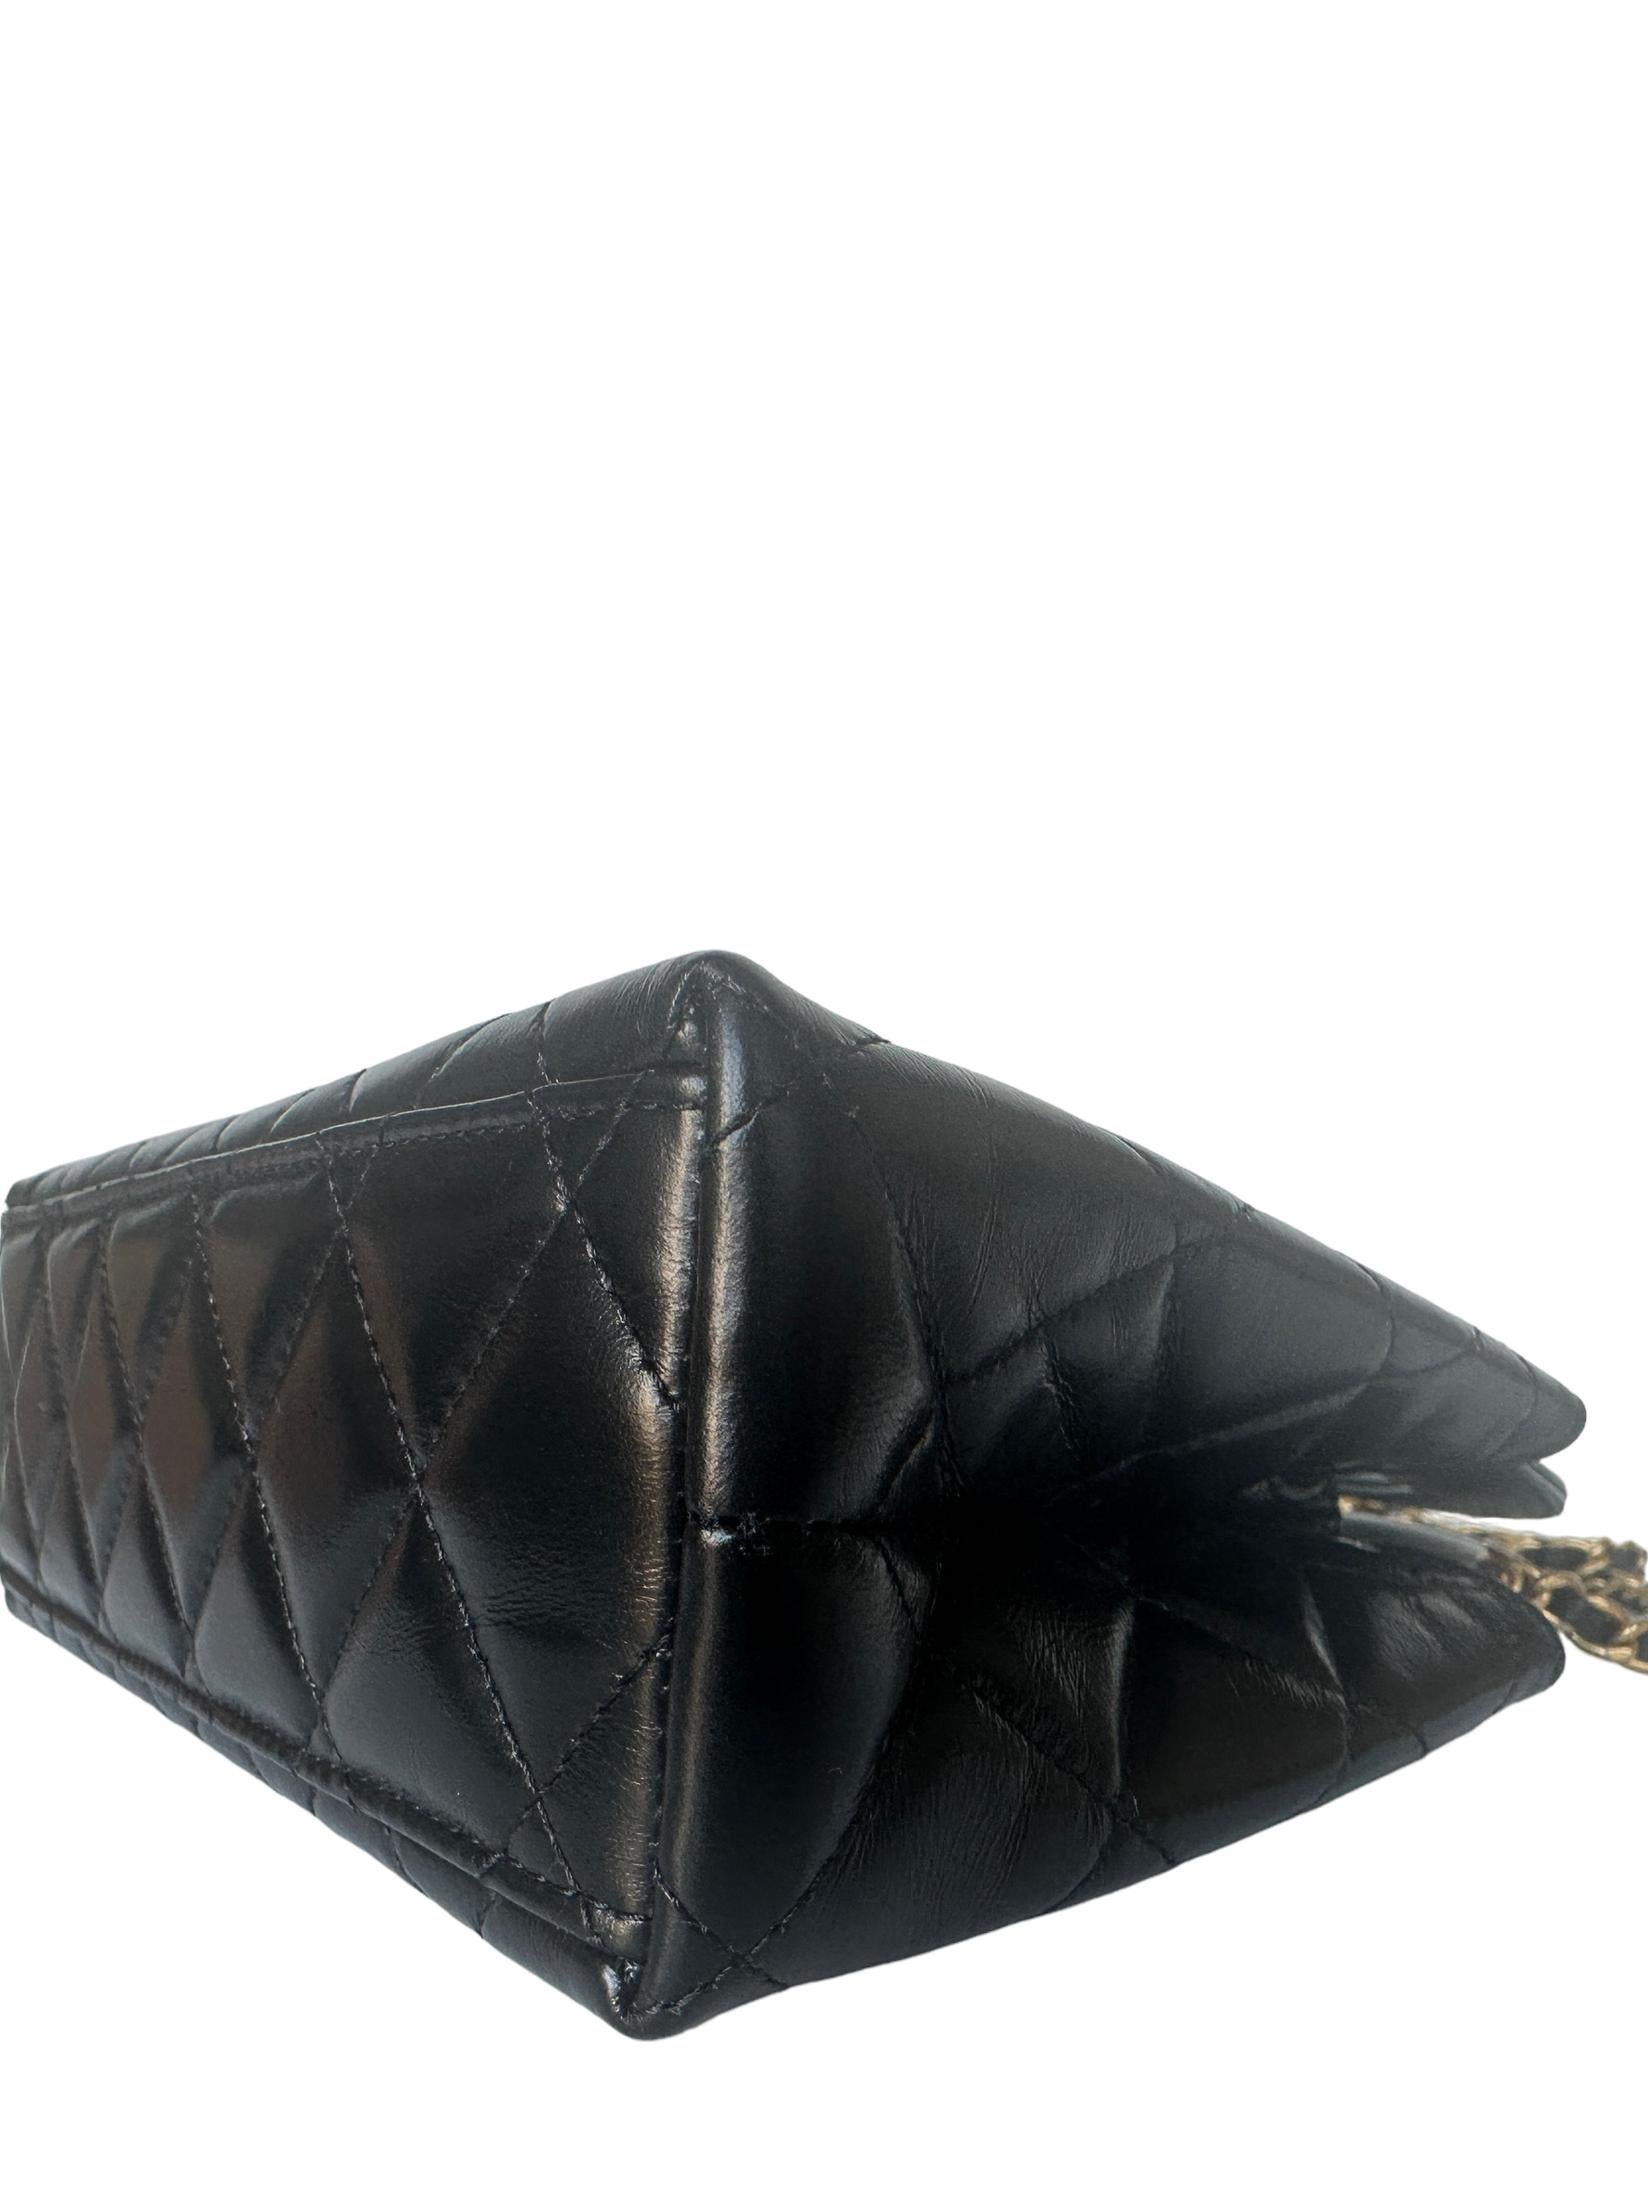 Women's Chanel Black Calfskin Quilted Nano Kelly Shopper Bag